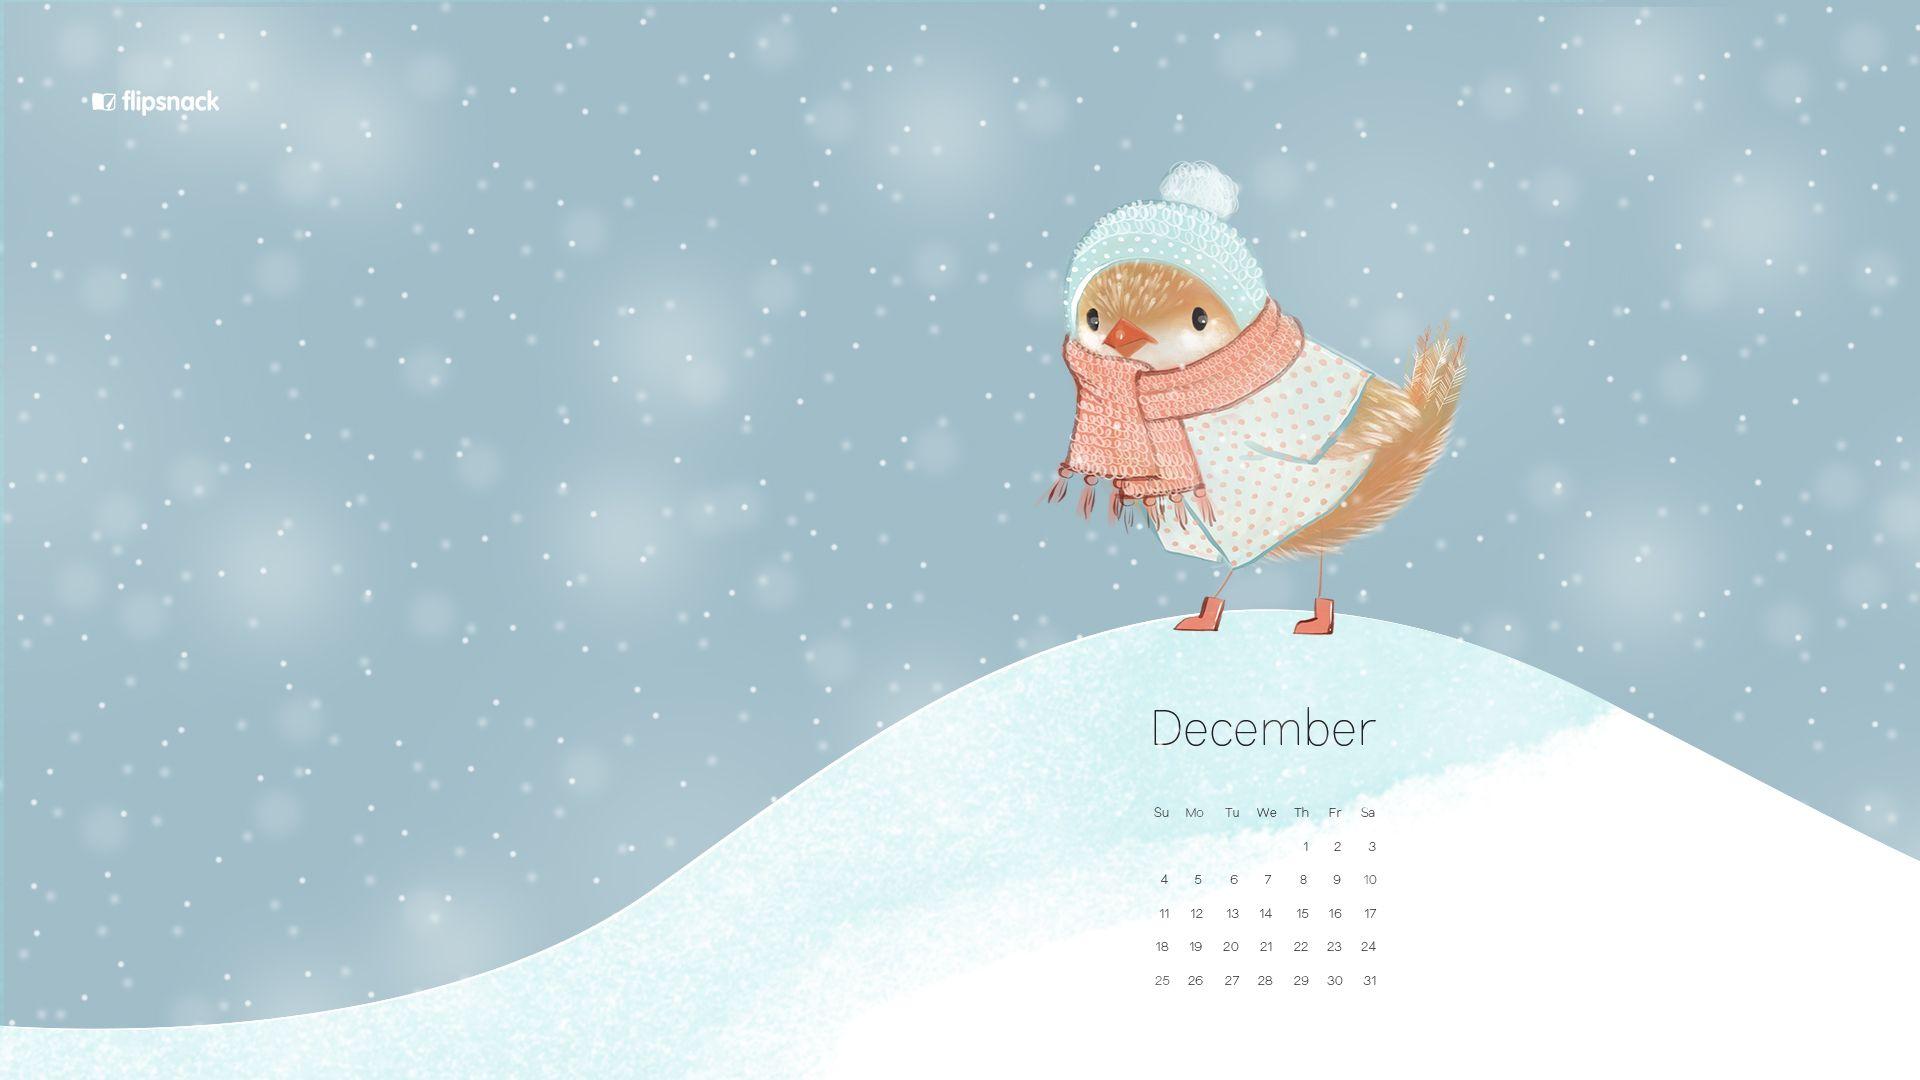 December 2016 calendar background